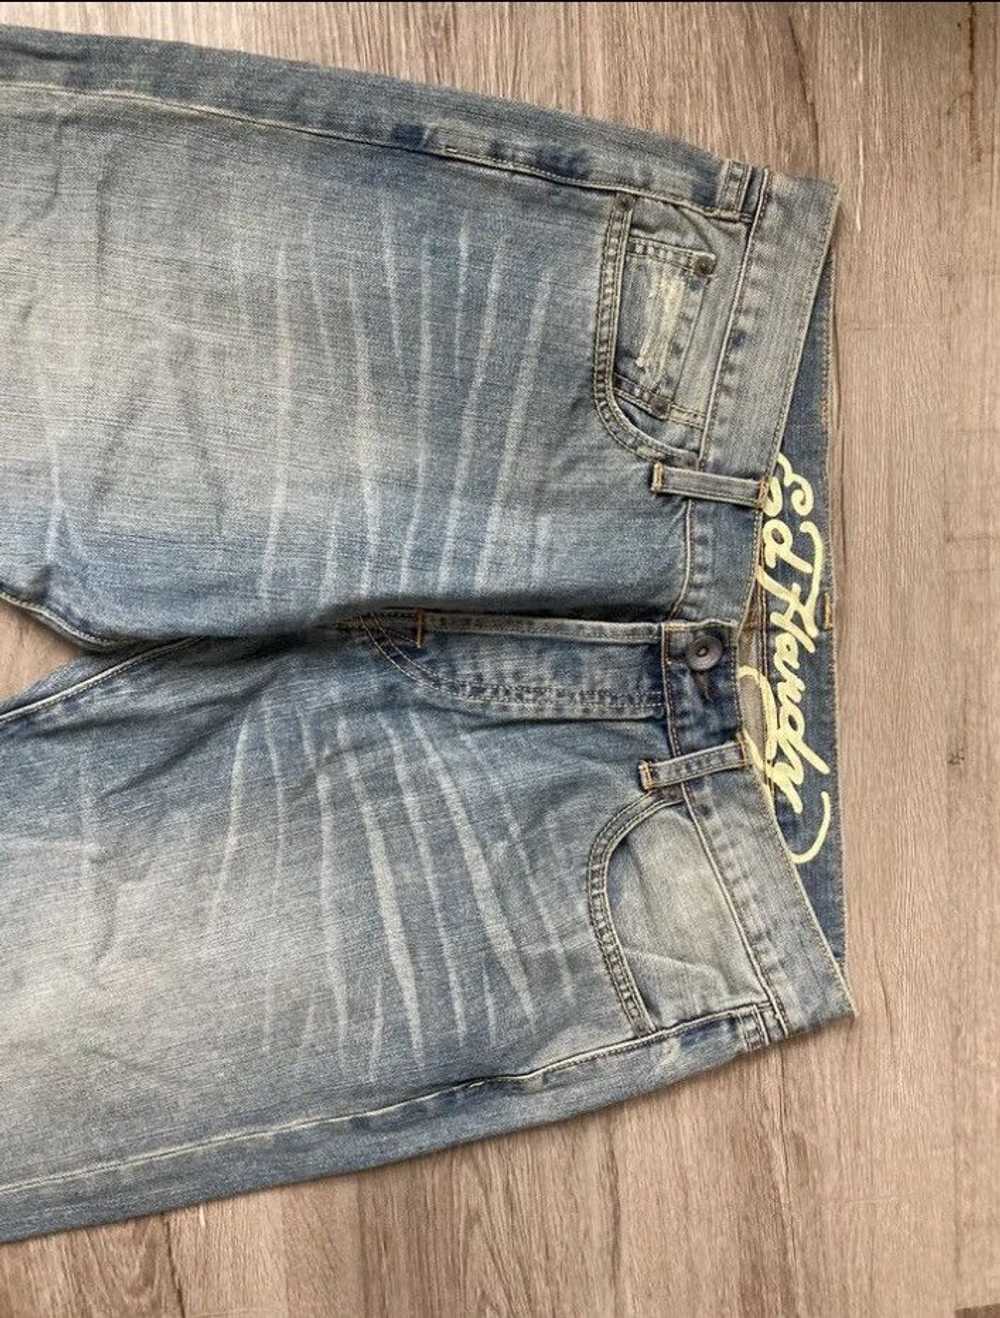 Christian Audigier × Ed Hardy Ed hardy jeans - image 3